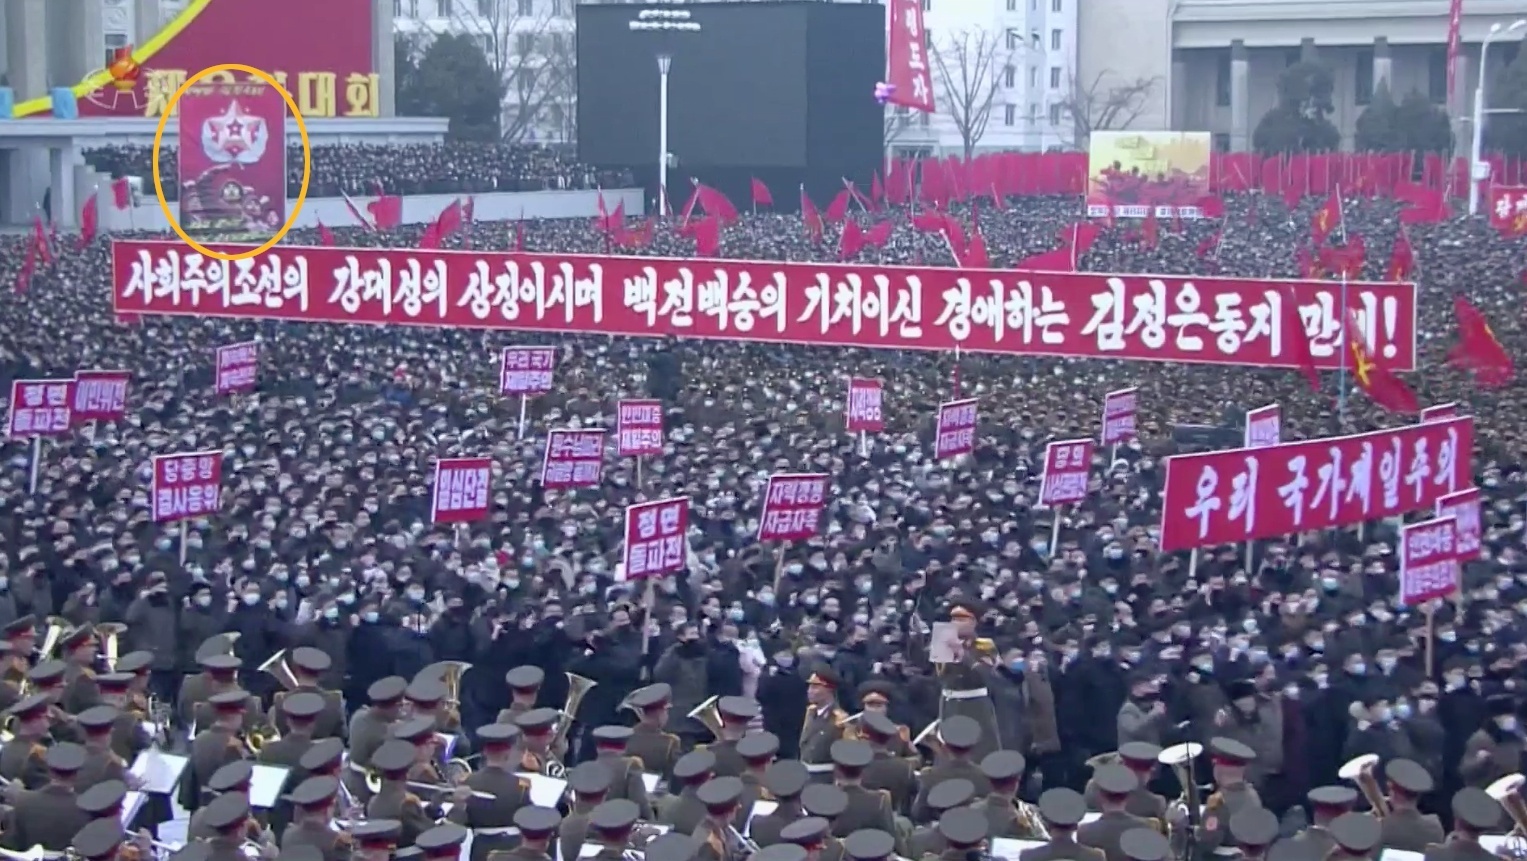 kctv-jan17-pyongyang-kim-il-sung-square-army-people-rally-propaganda-slogans-posters-post-congress2-00004.jpg